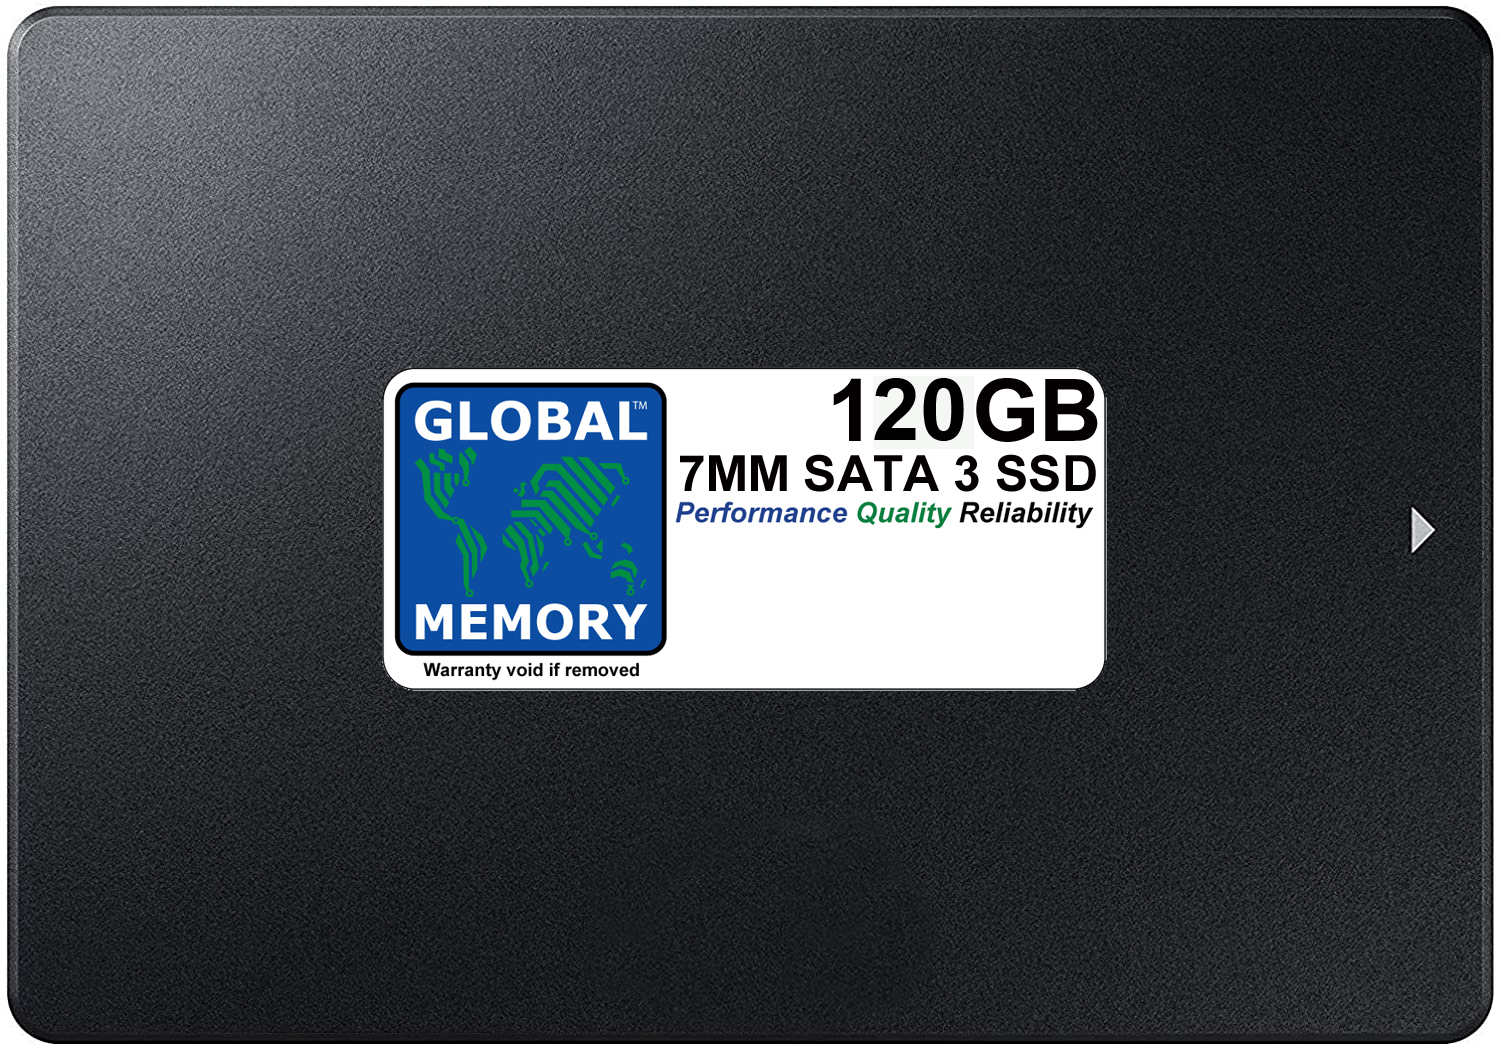 120GB 7mm SATA 3 SSD FOR LAPTOPS / DESKTOP PCs / SERVERS / WORKSTATIONS